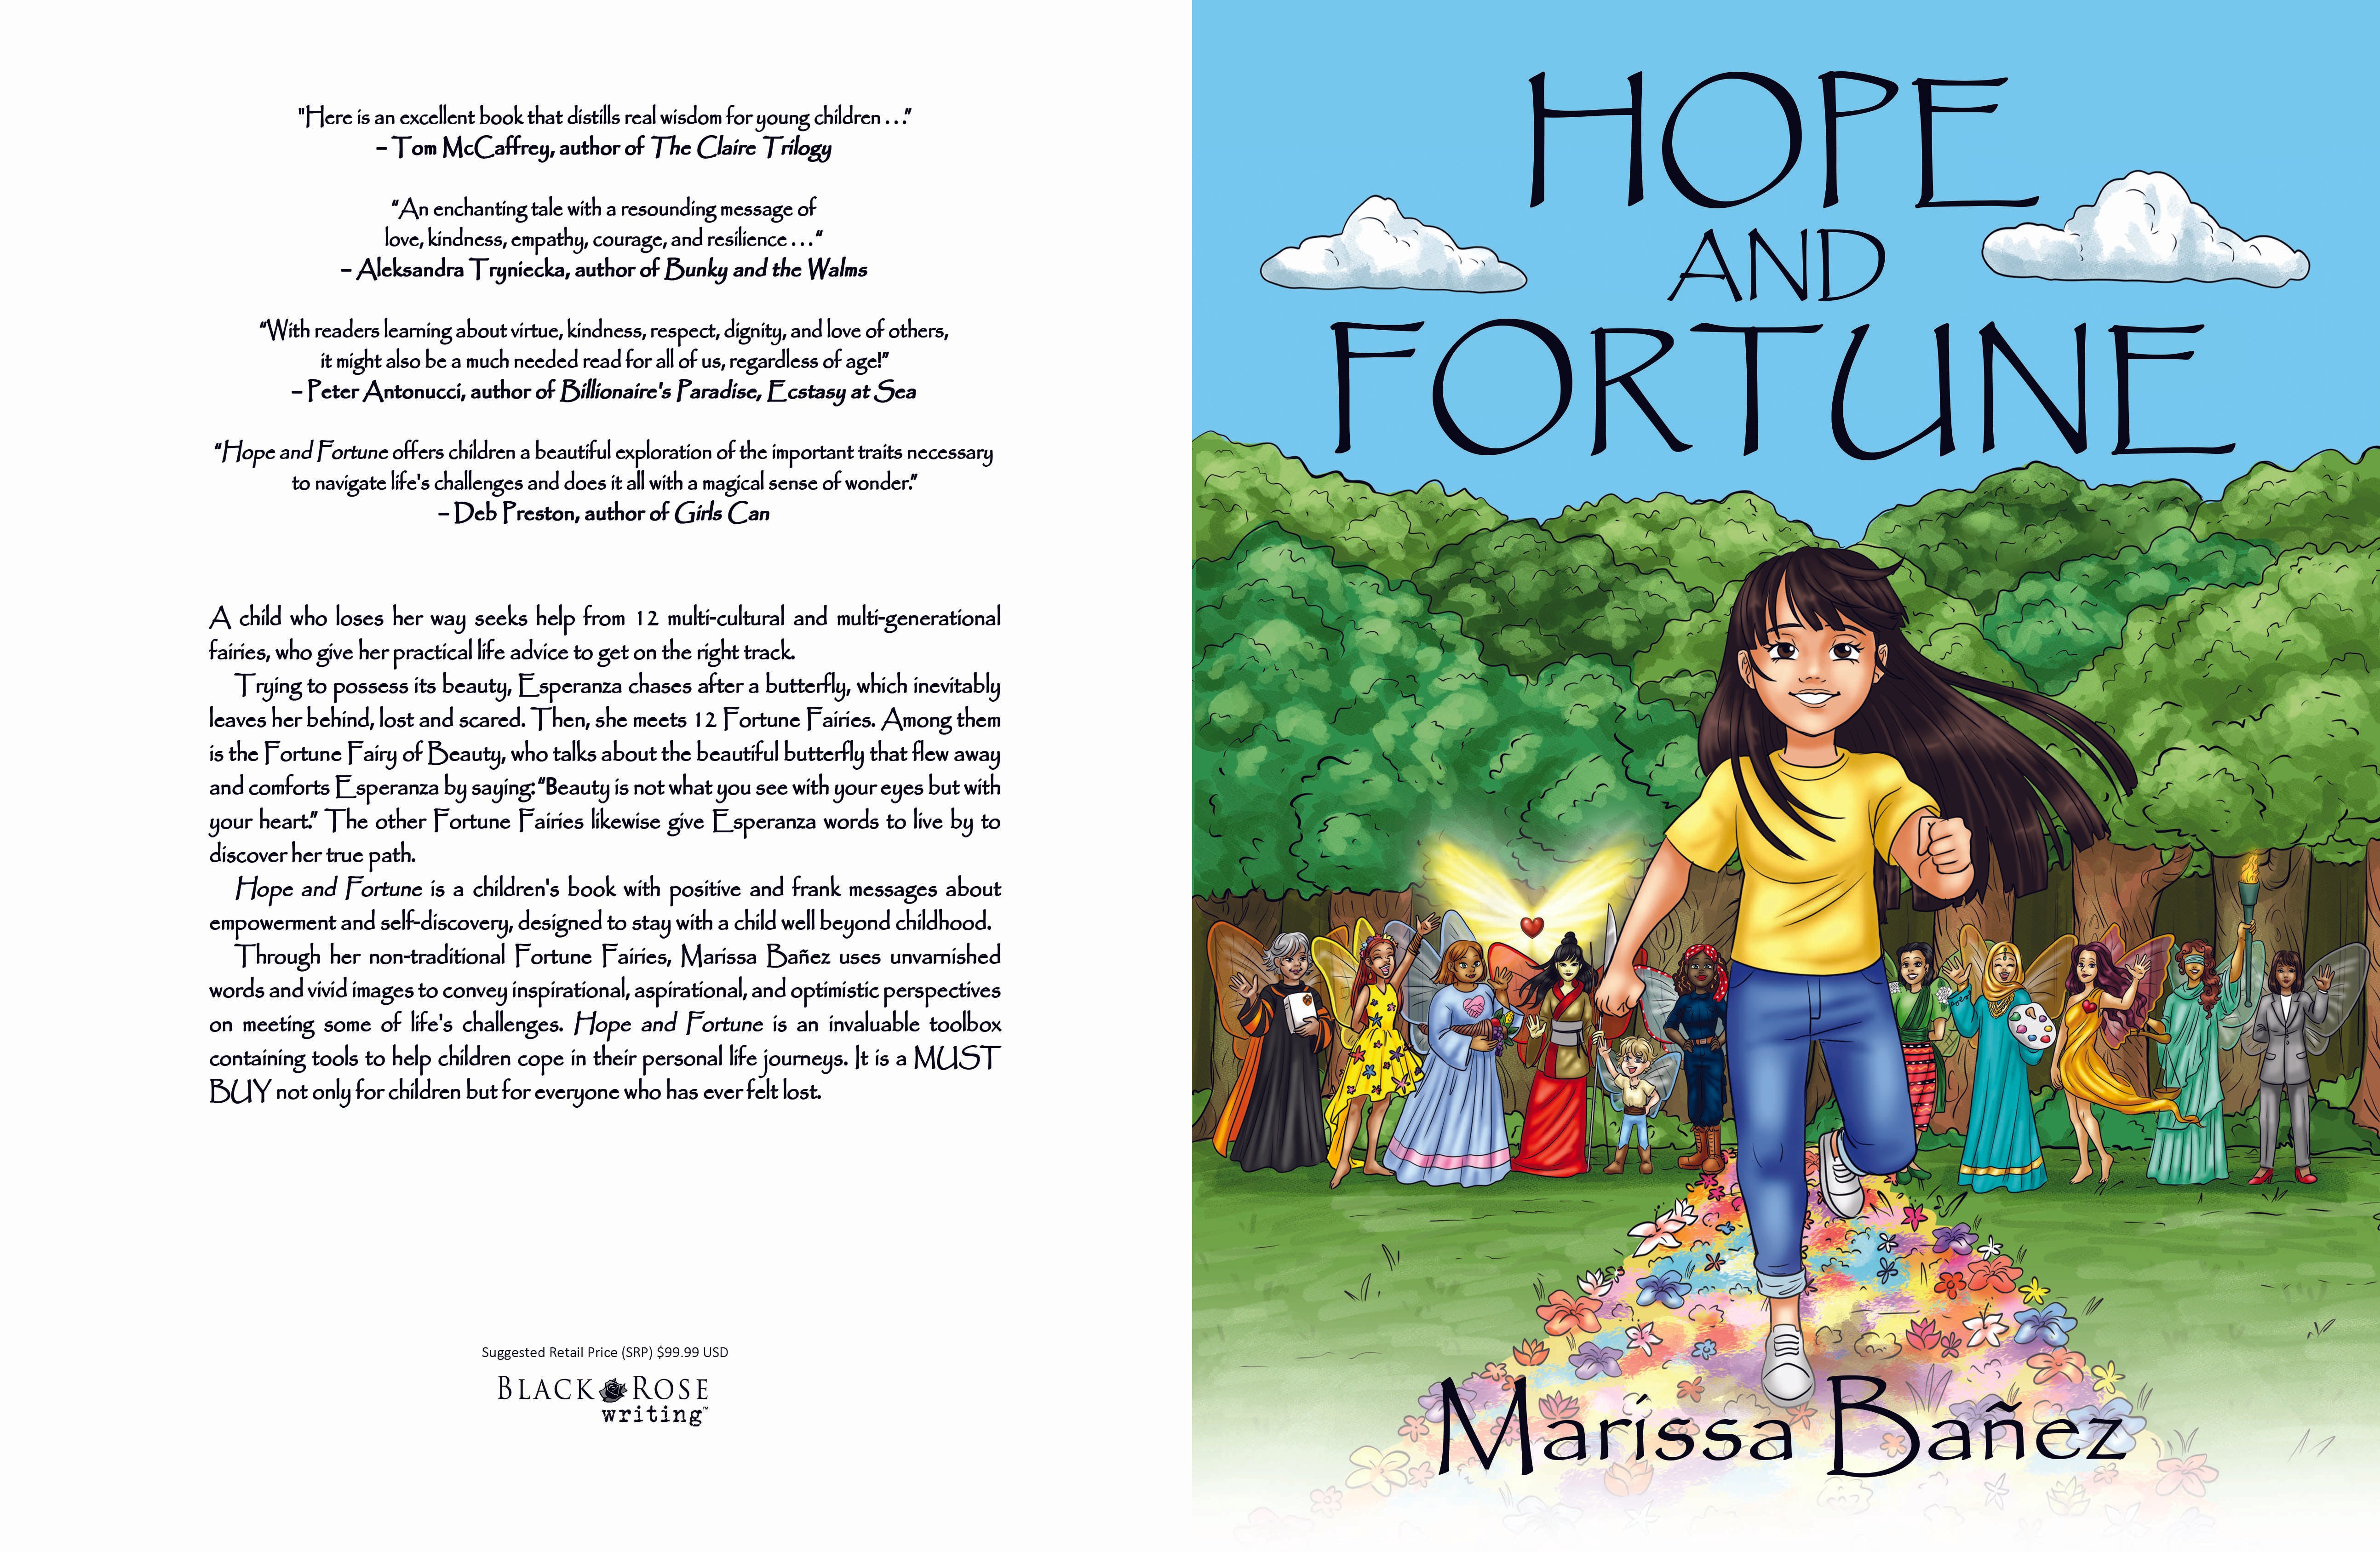 BARONG WAREHOUSE - VMBB1 - Hope and Fortune | By: Marissa Bañez - Kids' Filipino Fiction Book